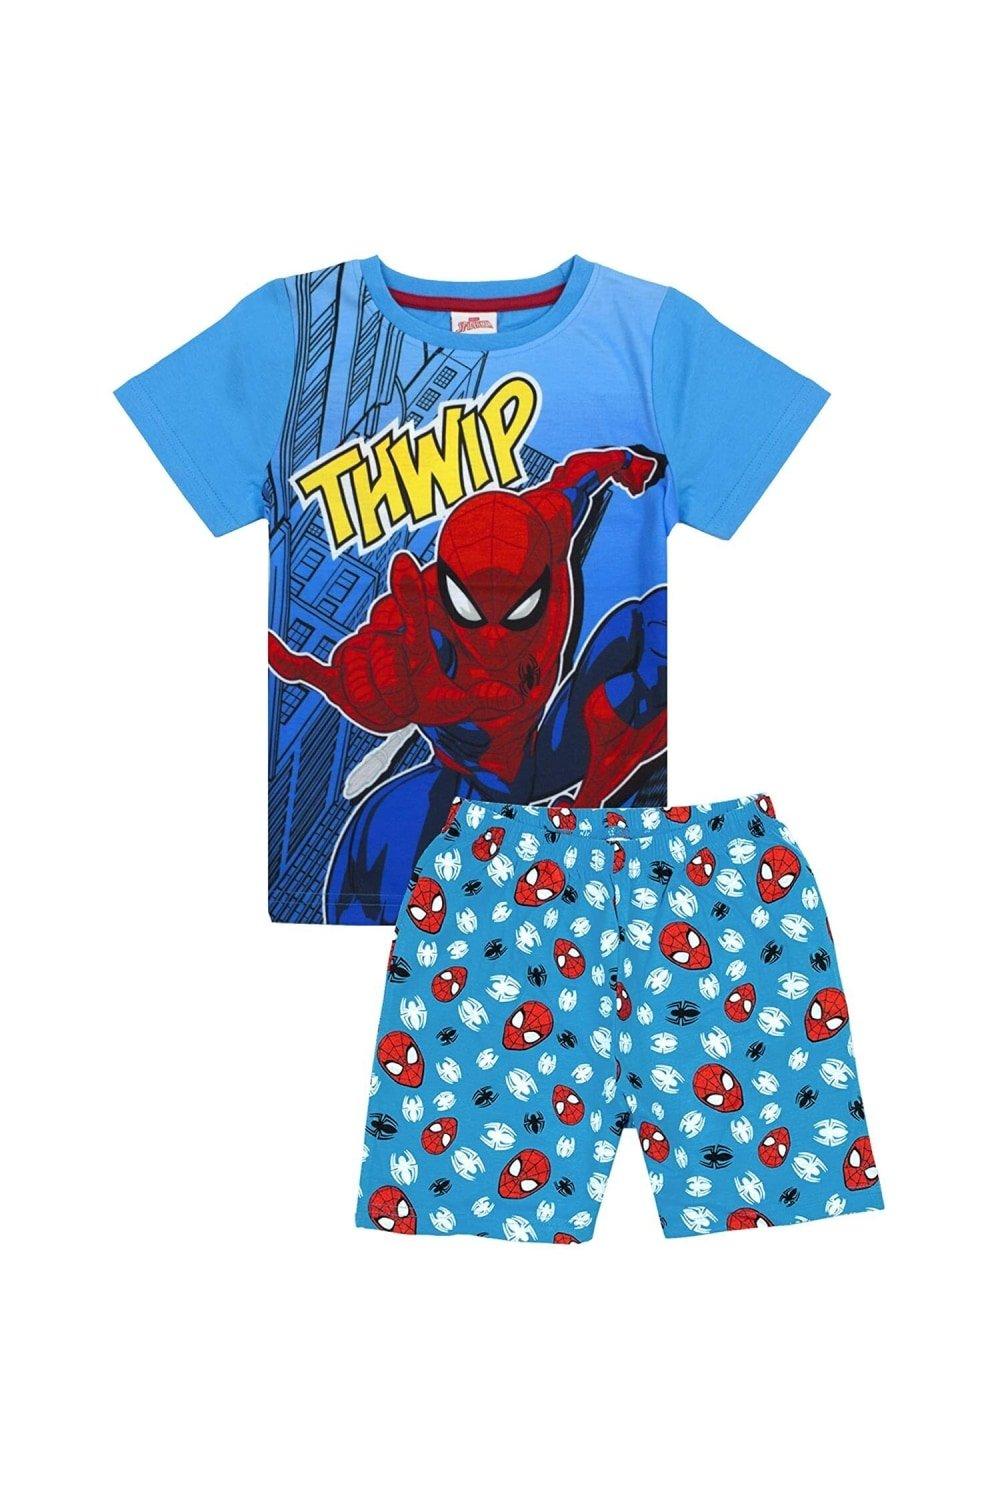 Thwamm Comic Cotton Short Pyjama Set